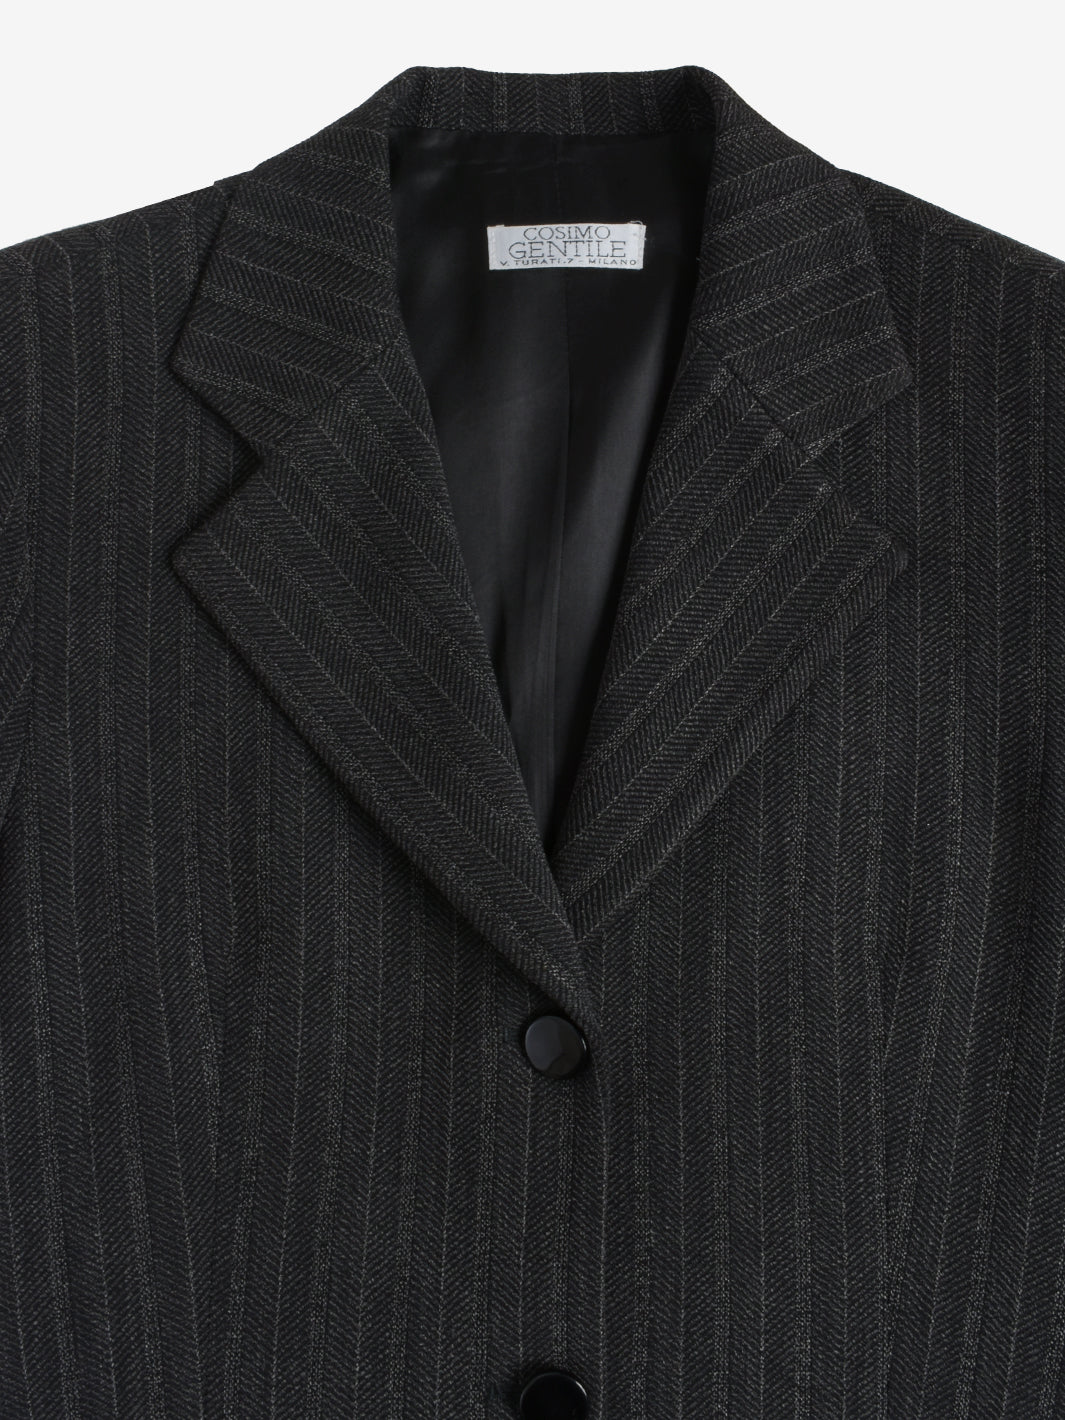 Cosimo Gentile Harringbone Gray Suit